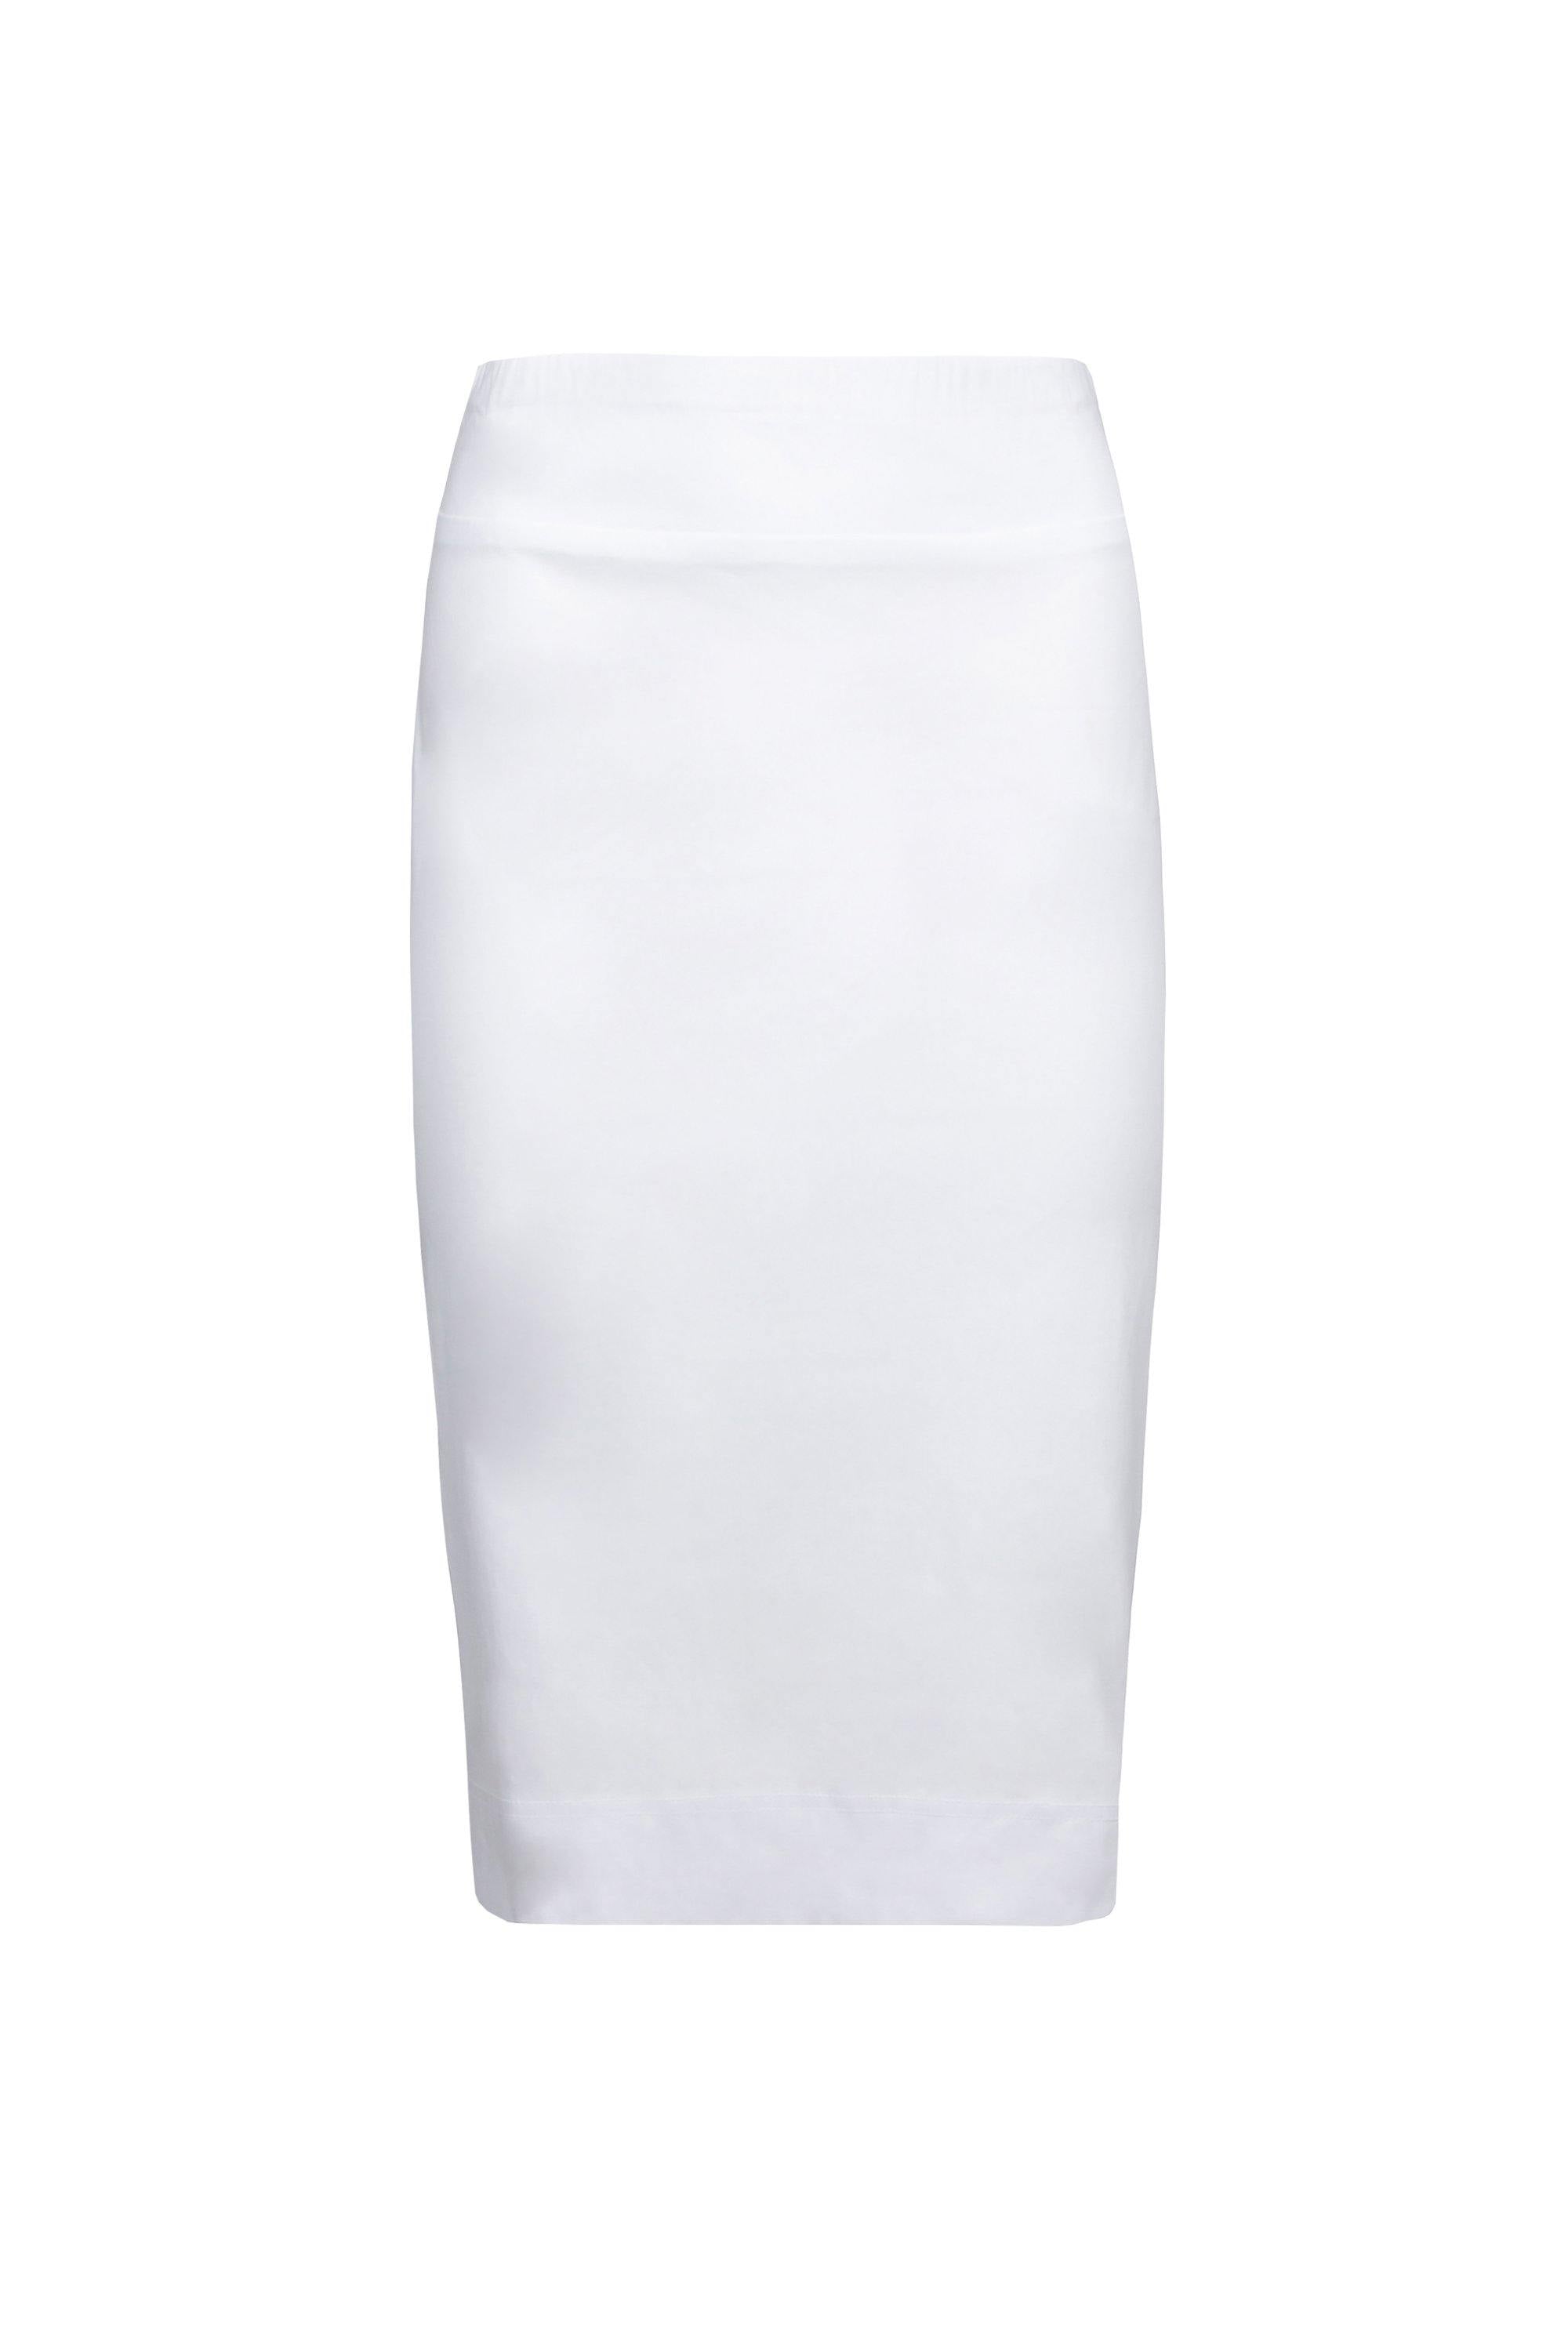 Acrobat Desiree Skirt - White - Skirt VERGE